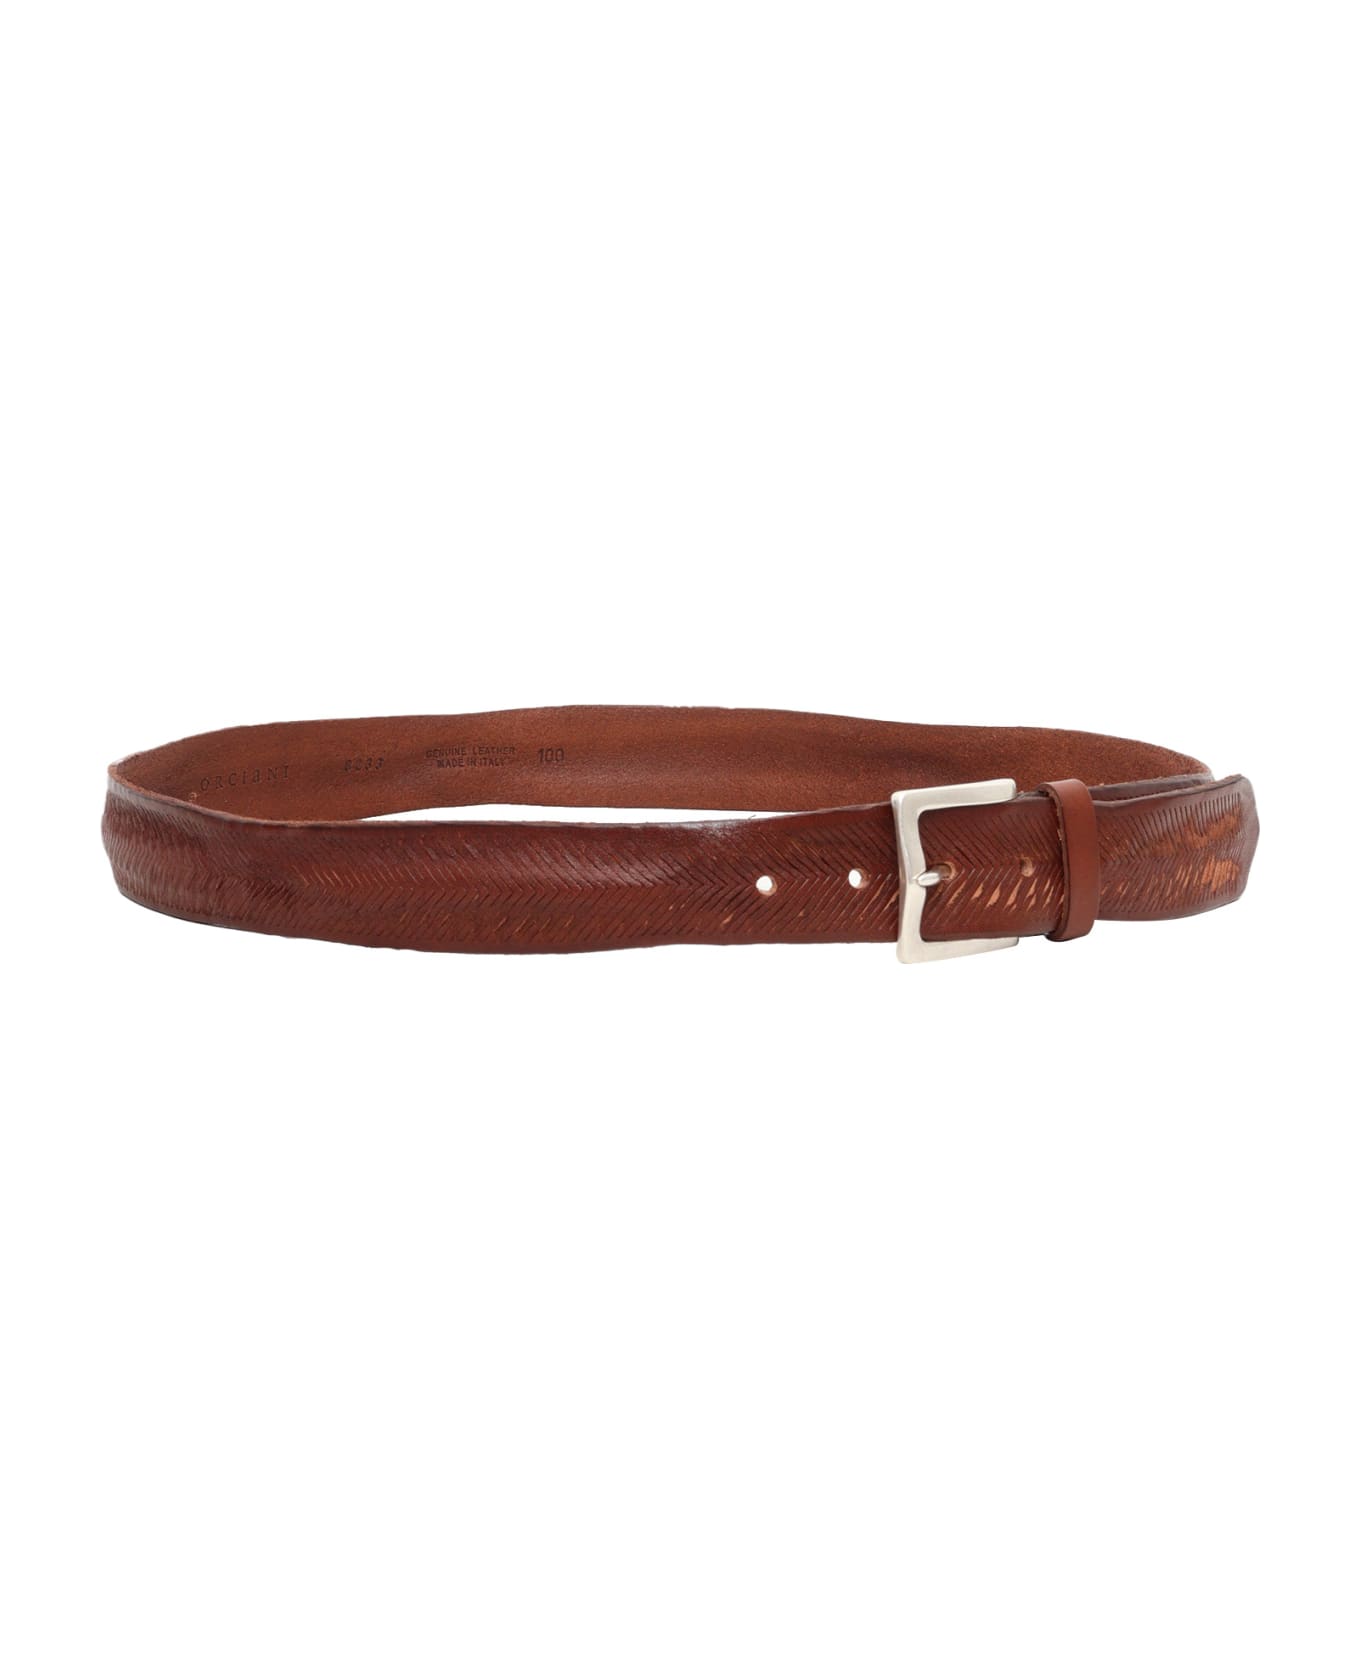 Orciani Carved Brown Belt - BROWN